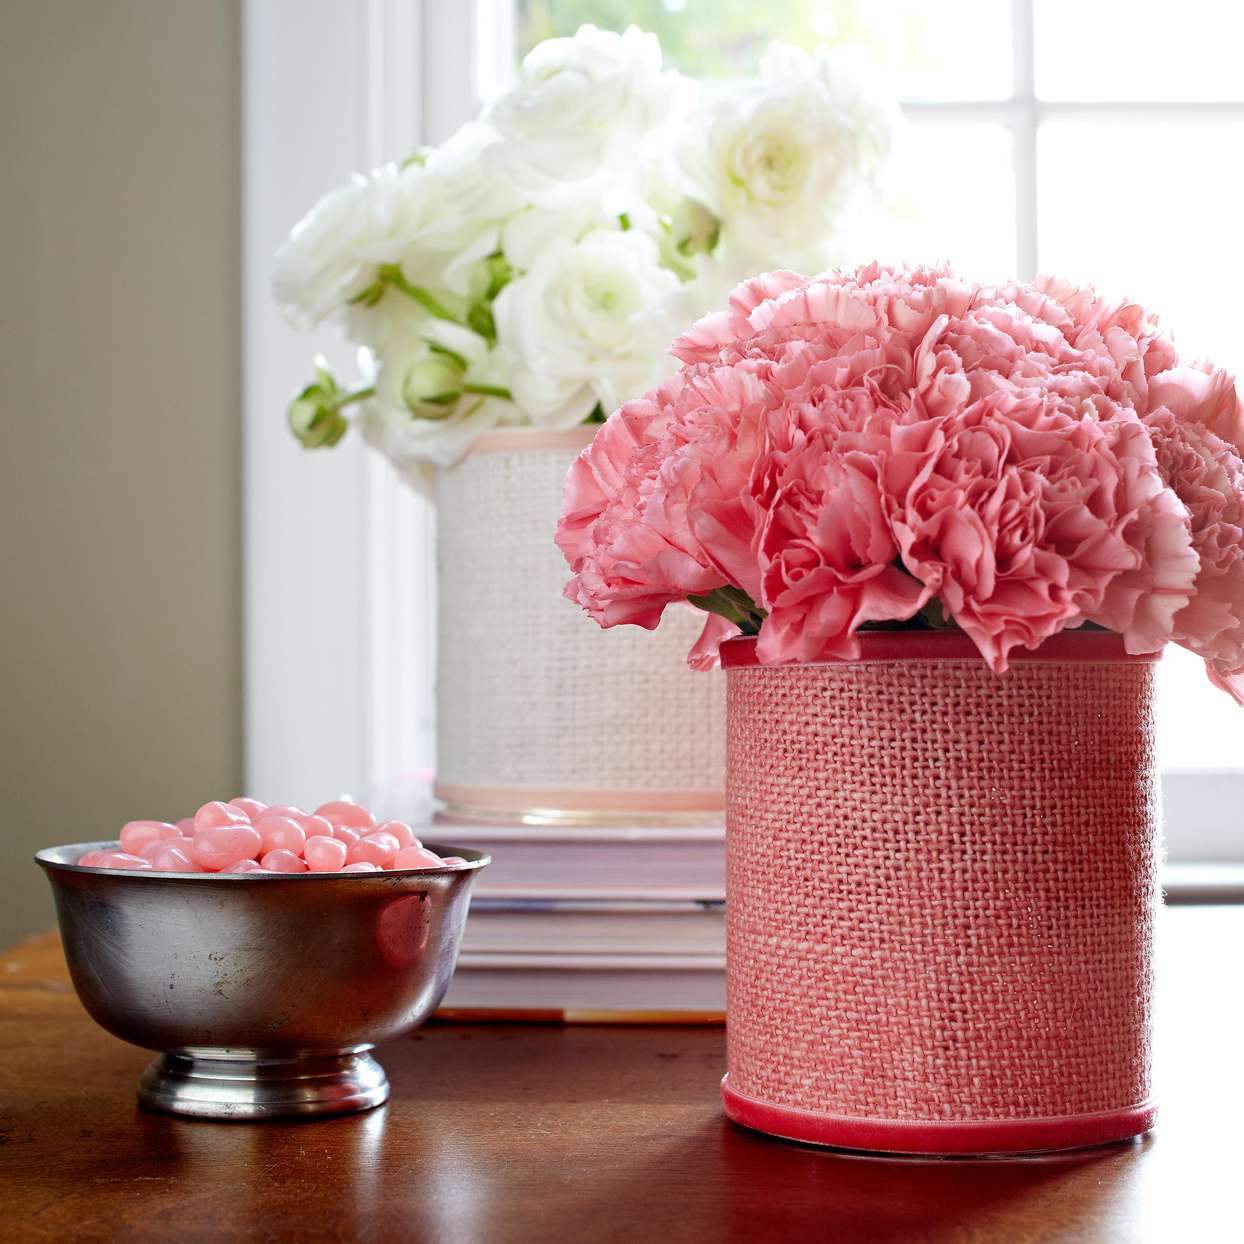 Burlap-wrapped flower vases